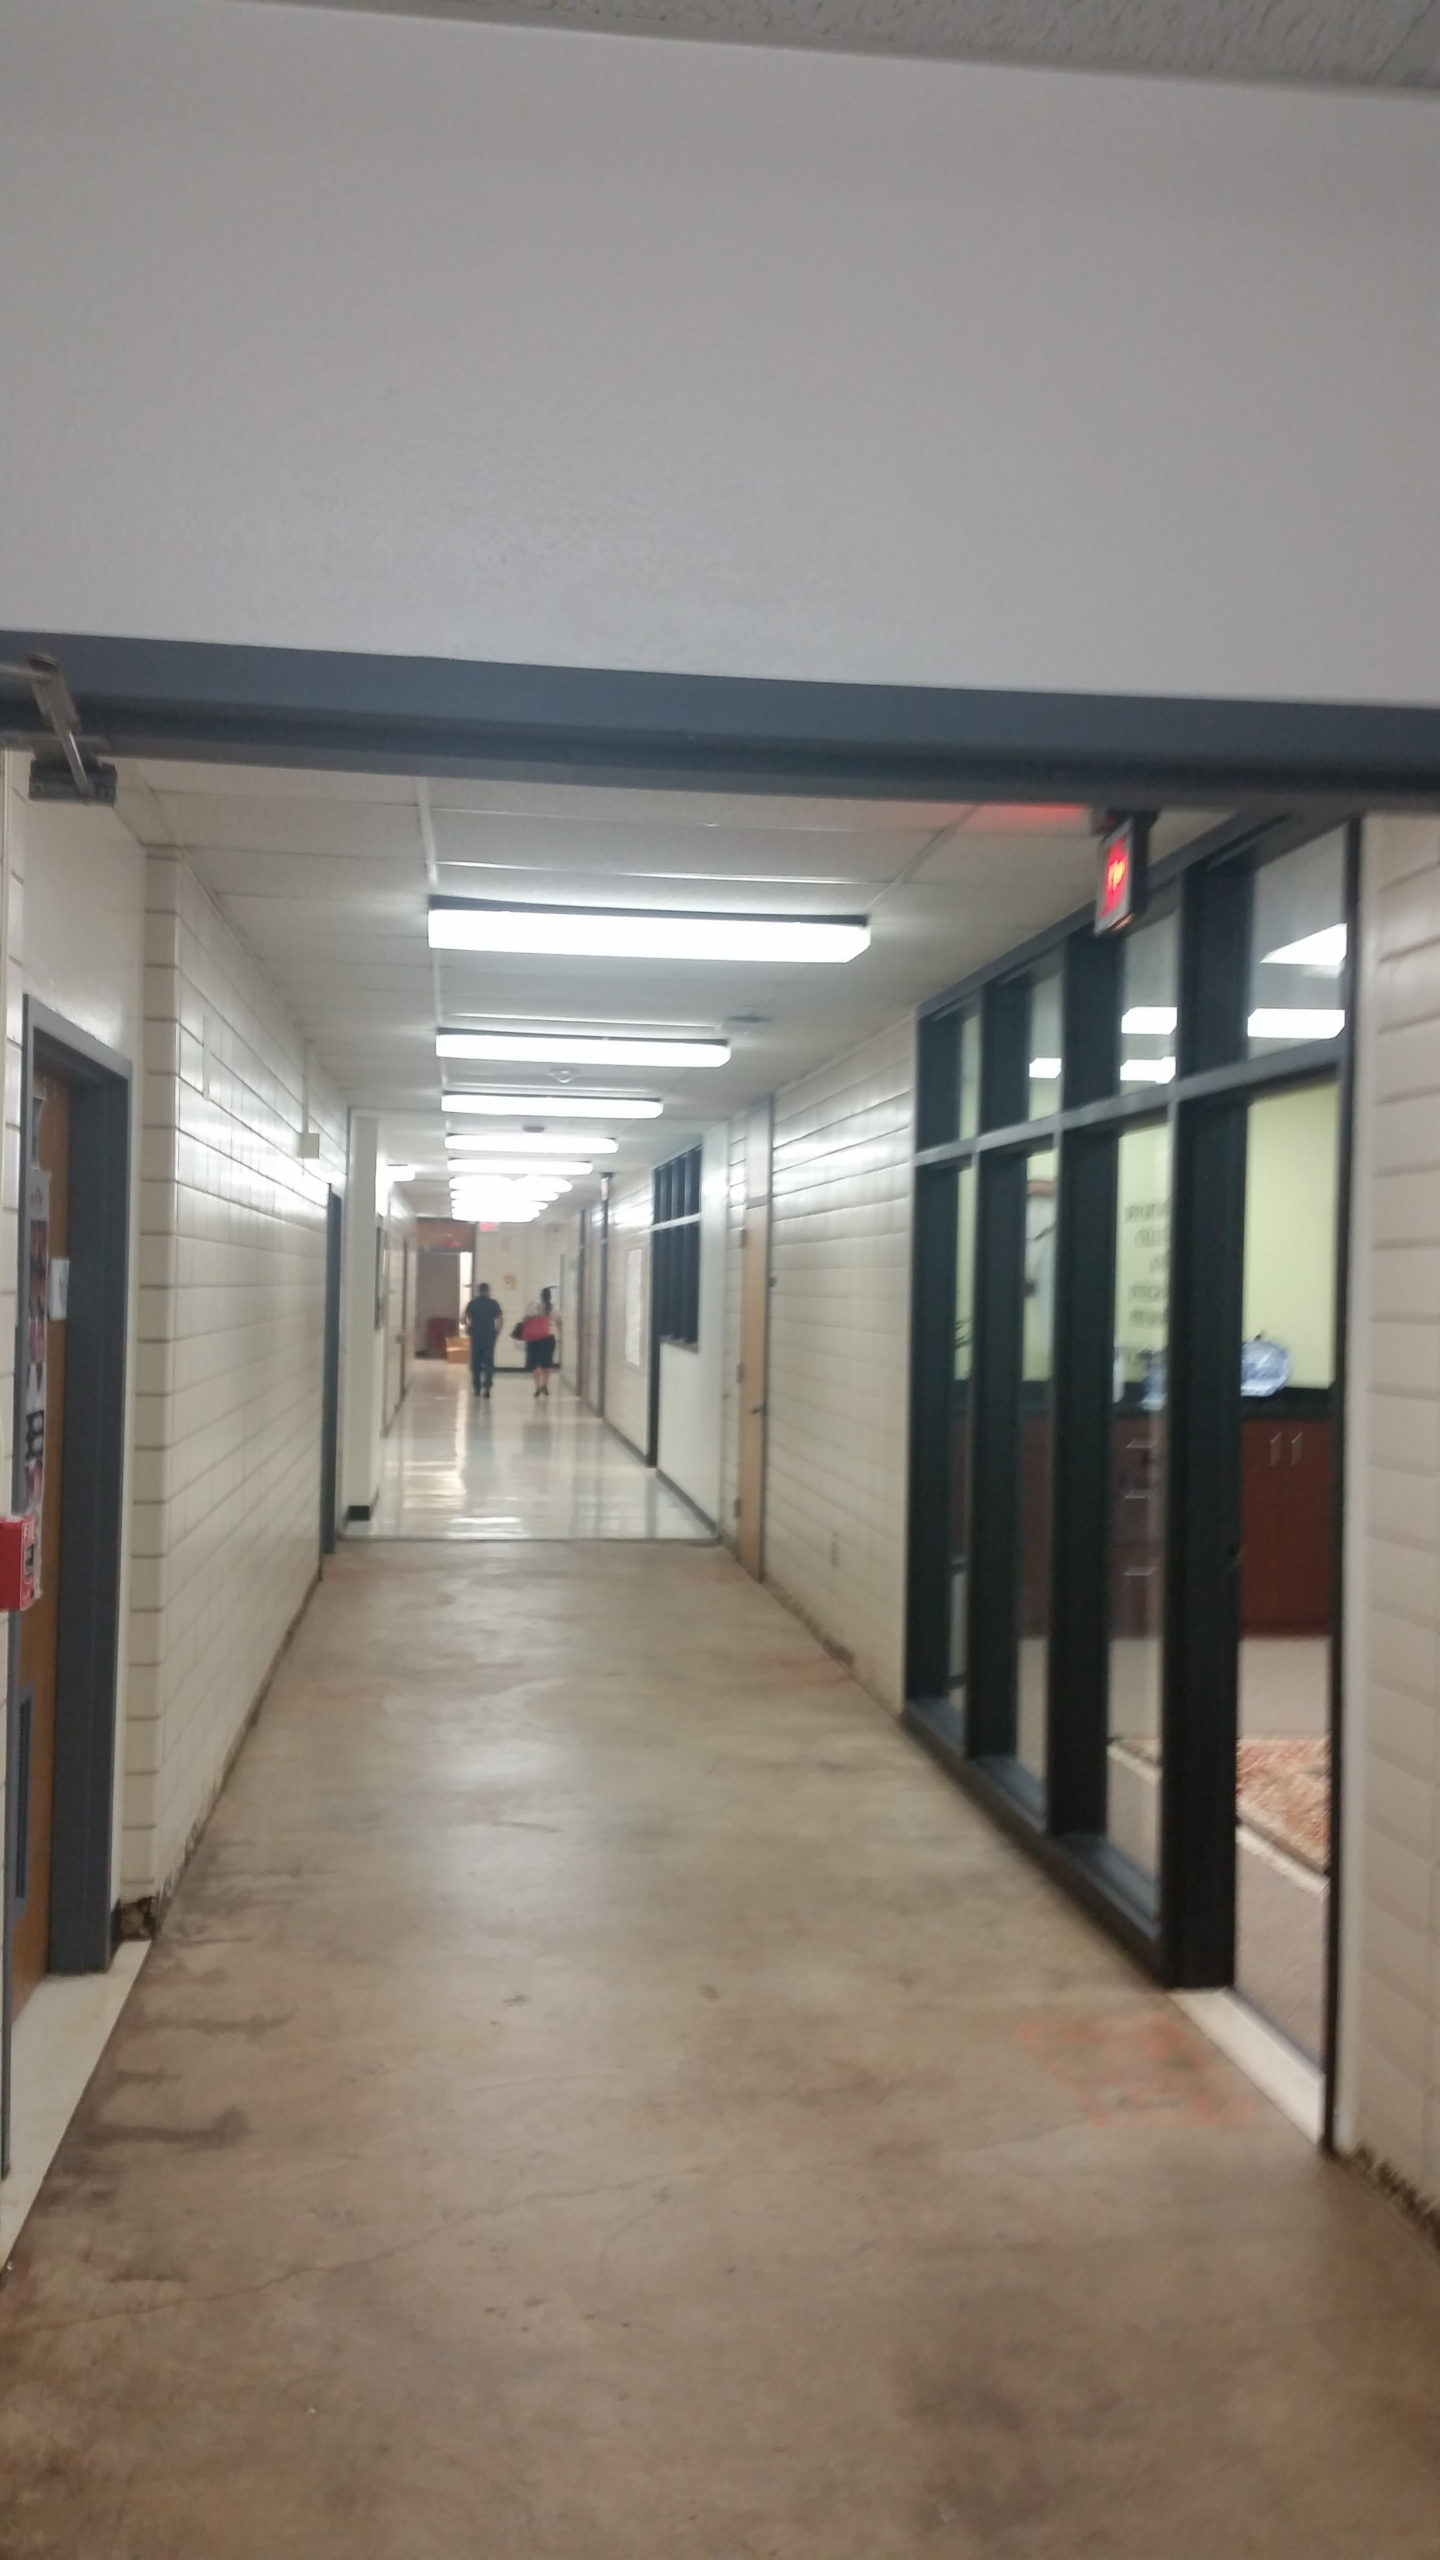 UTHSCSA Facilities Management Corridor Improvements 